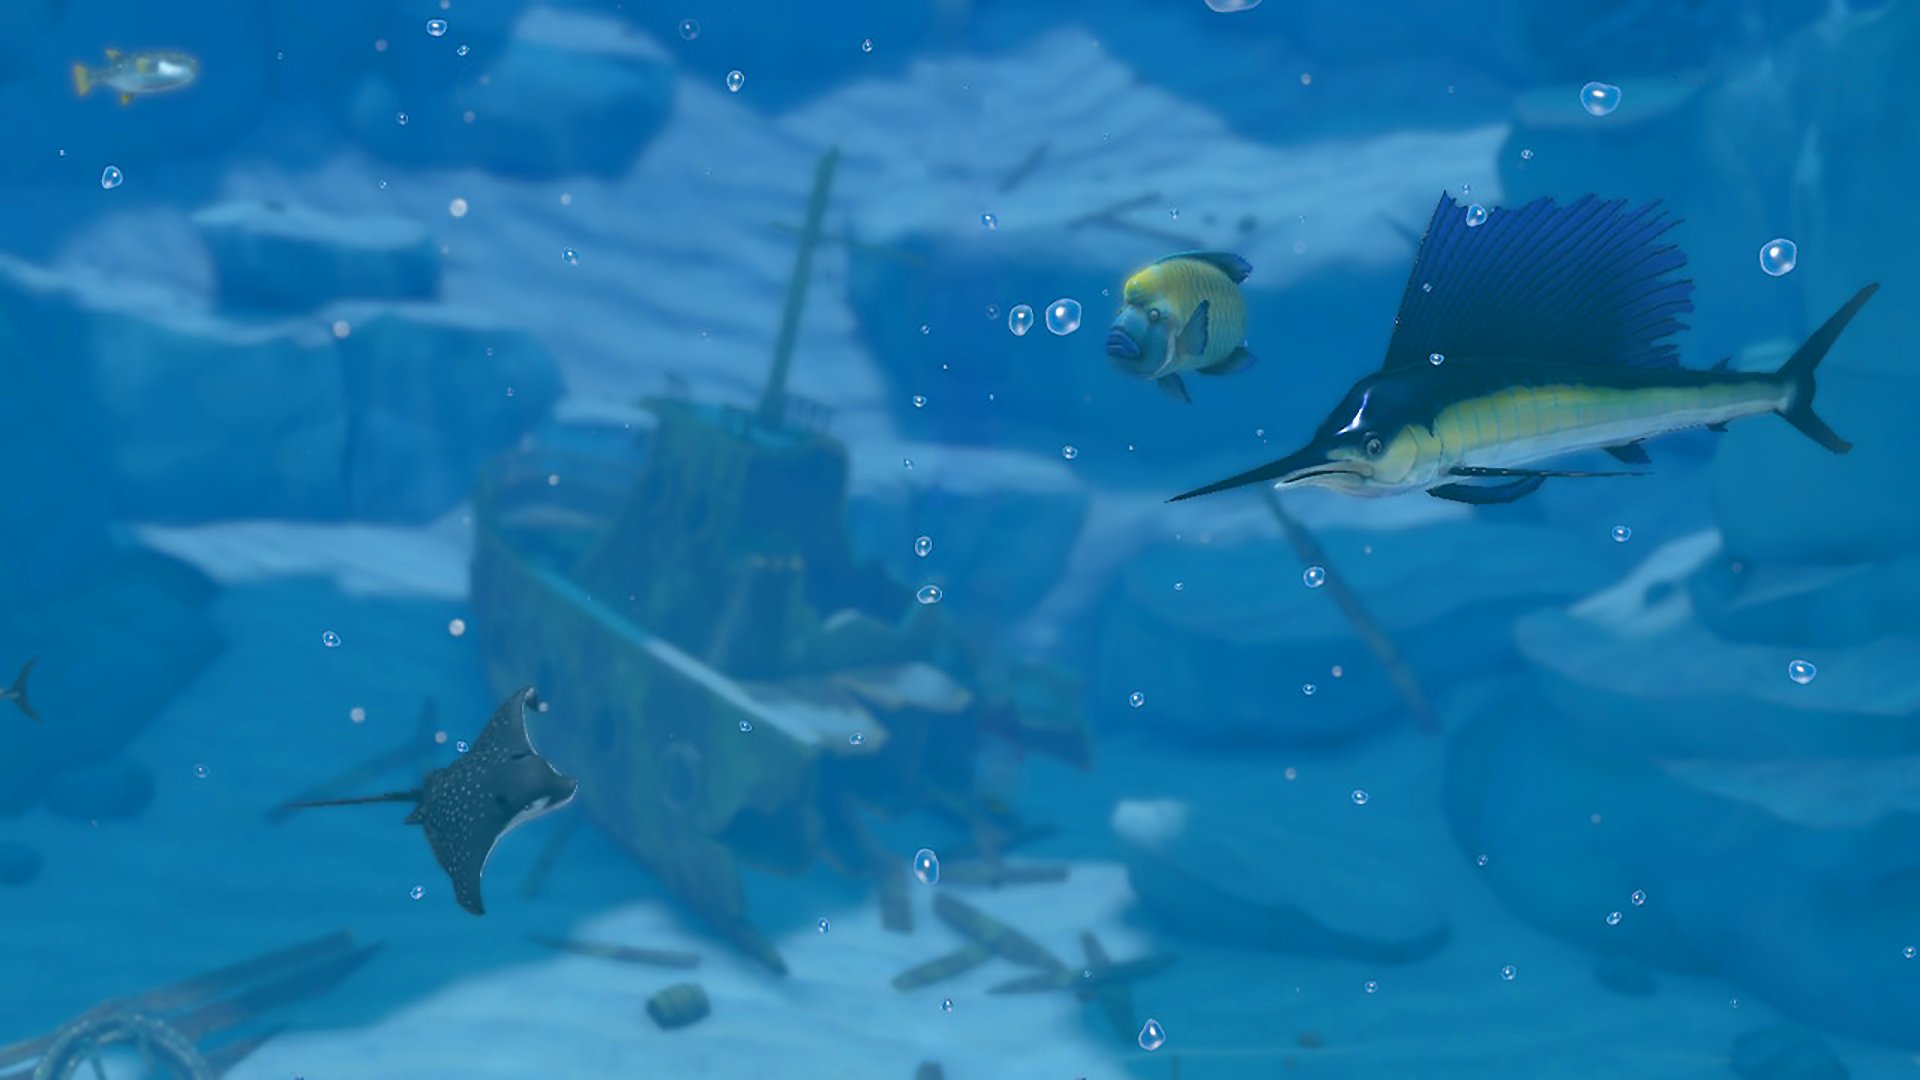 Nintendo Labo 2 - Underwater scene